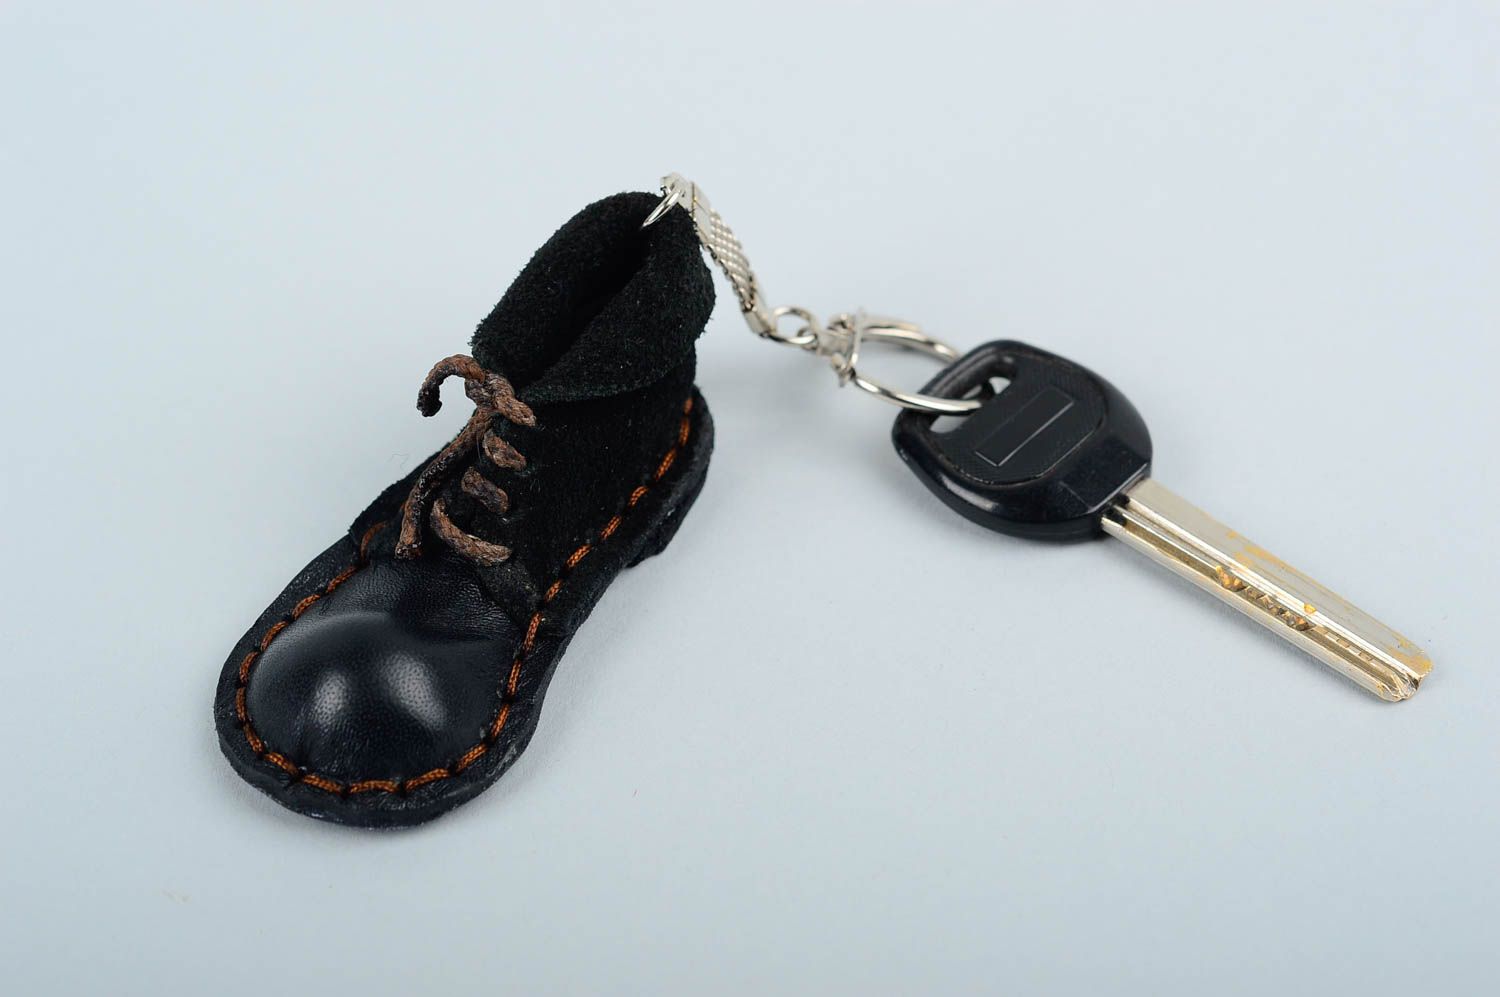 Stylish handmade leather keychain leather goods fashion accessories gift ideas photo 1